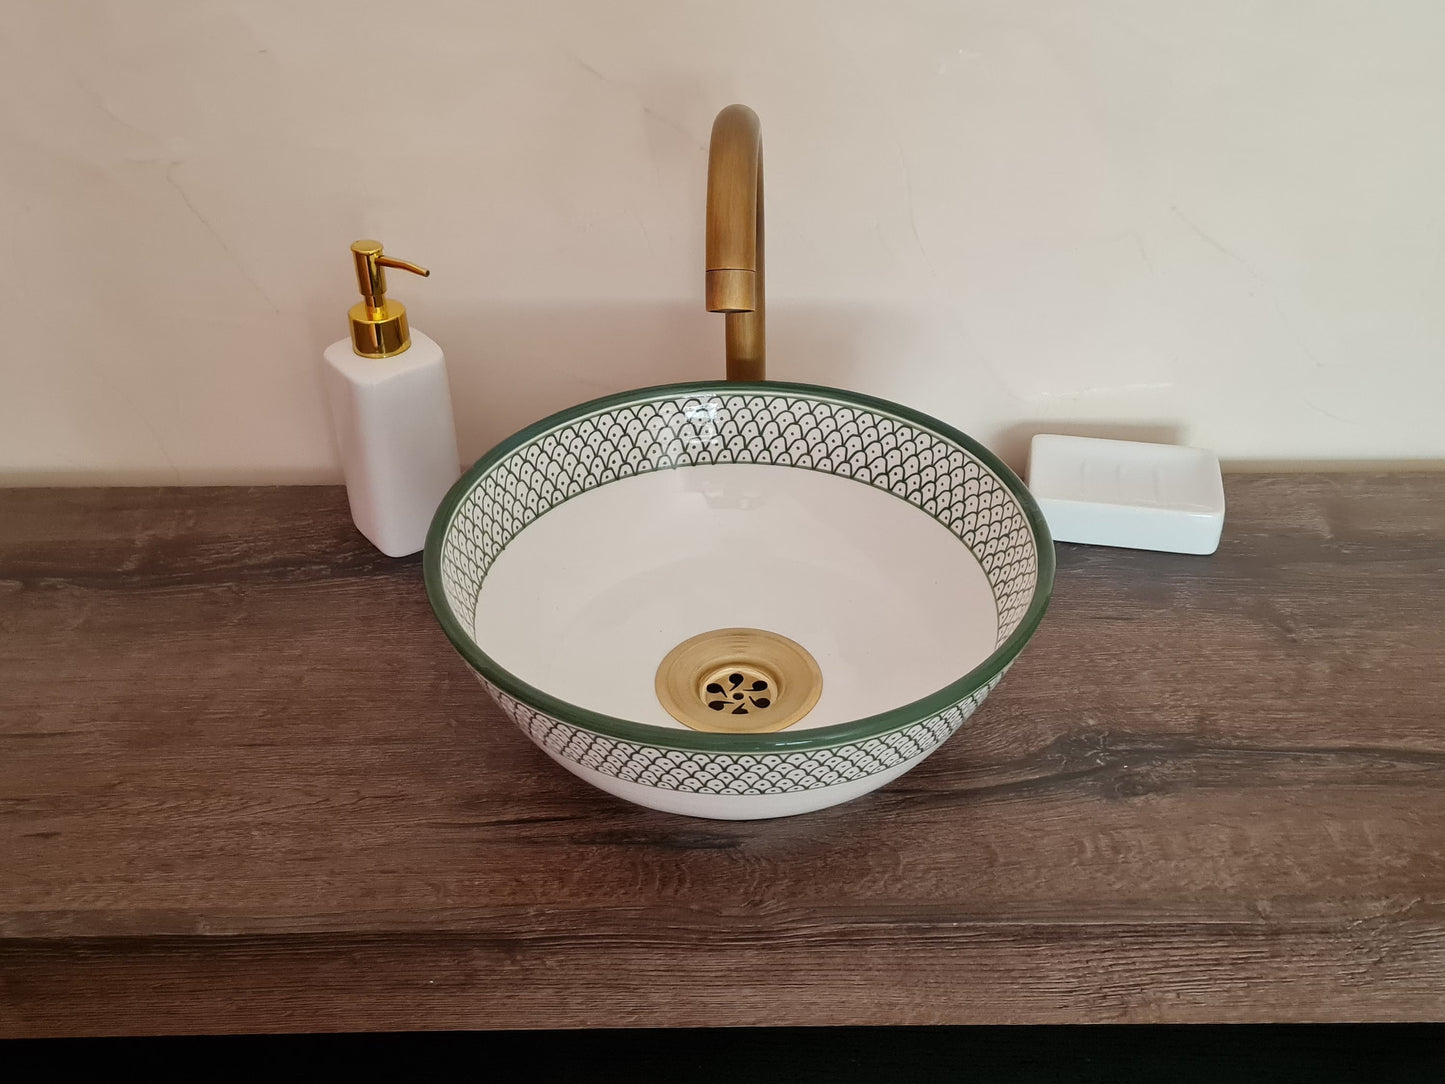 Moroccan sink | moroccan ceramic sink | bathroom sink | moroccan bathroom basin | cloakroom basin | Green sink #177